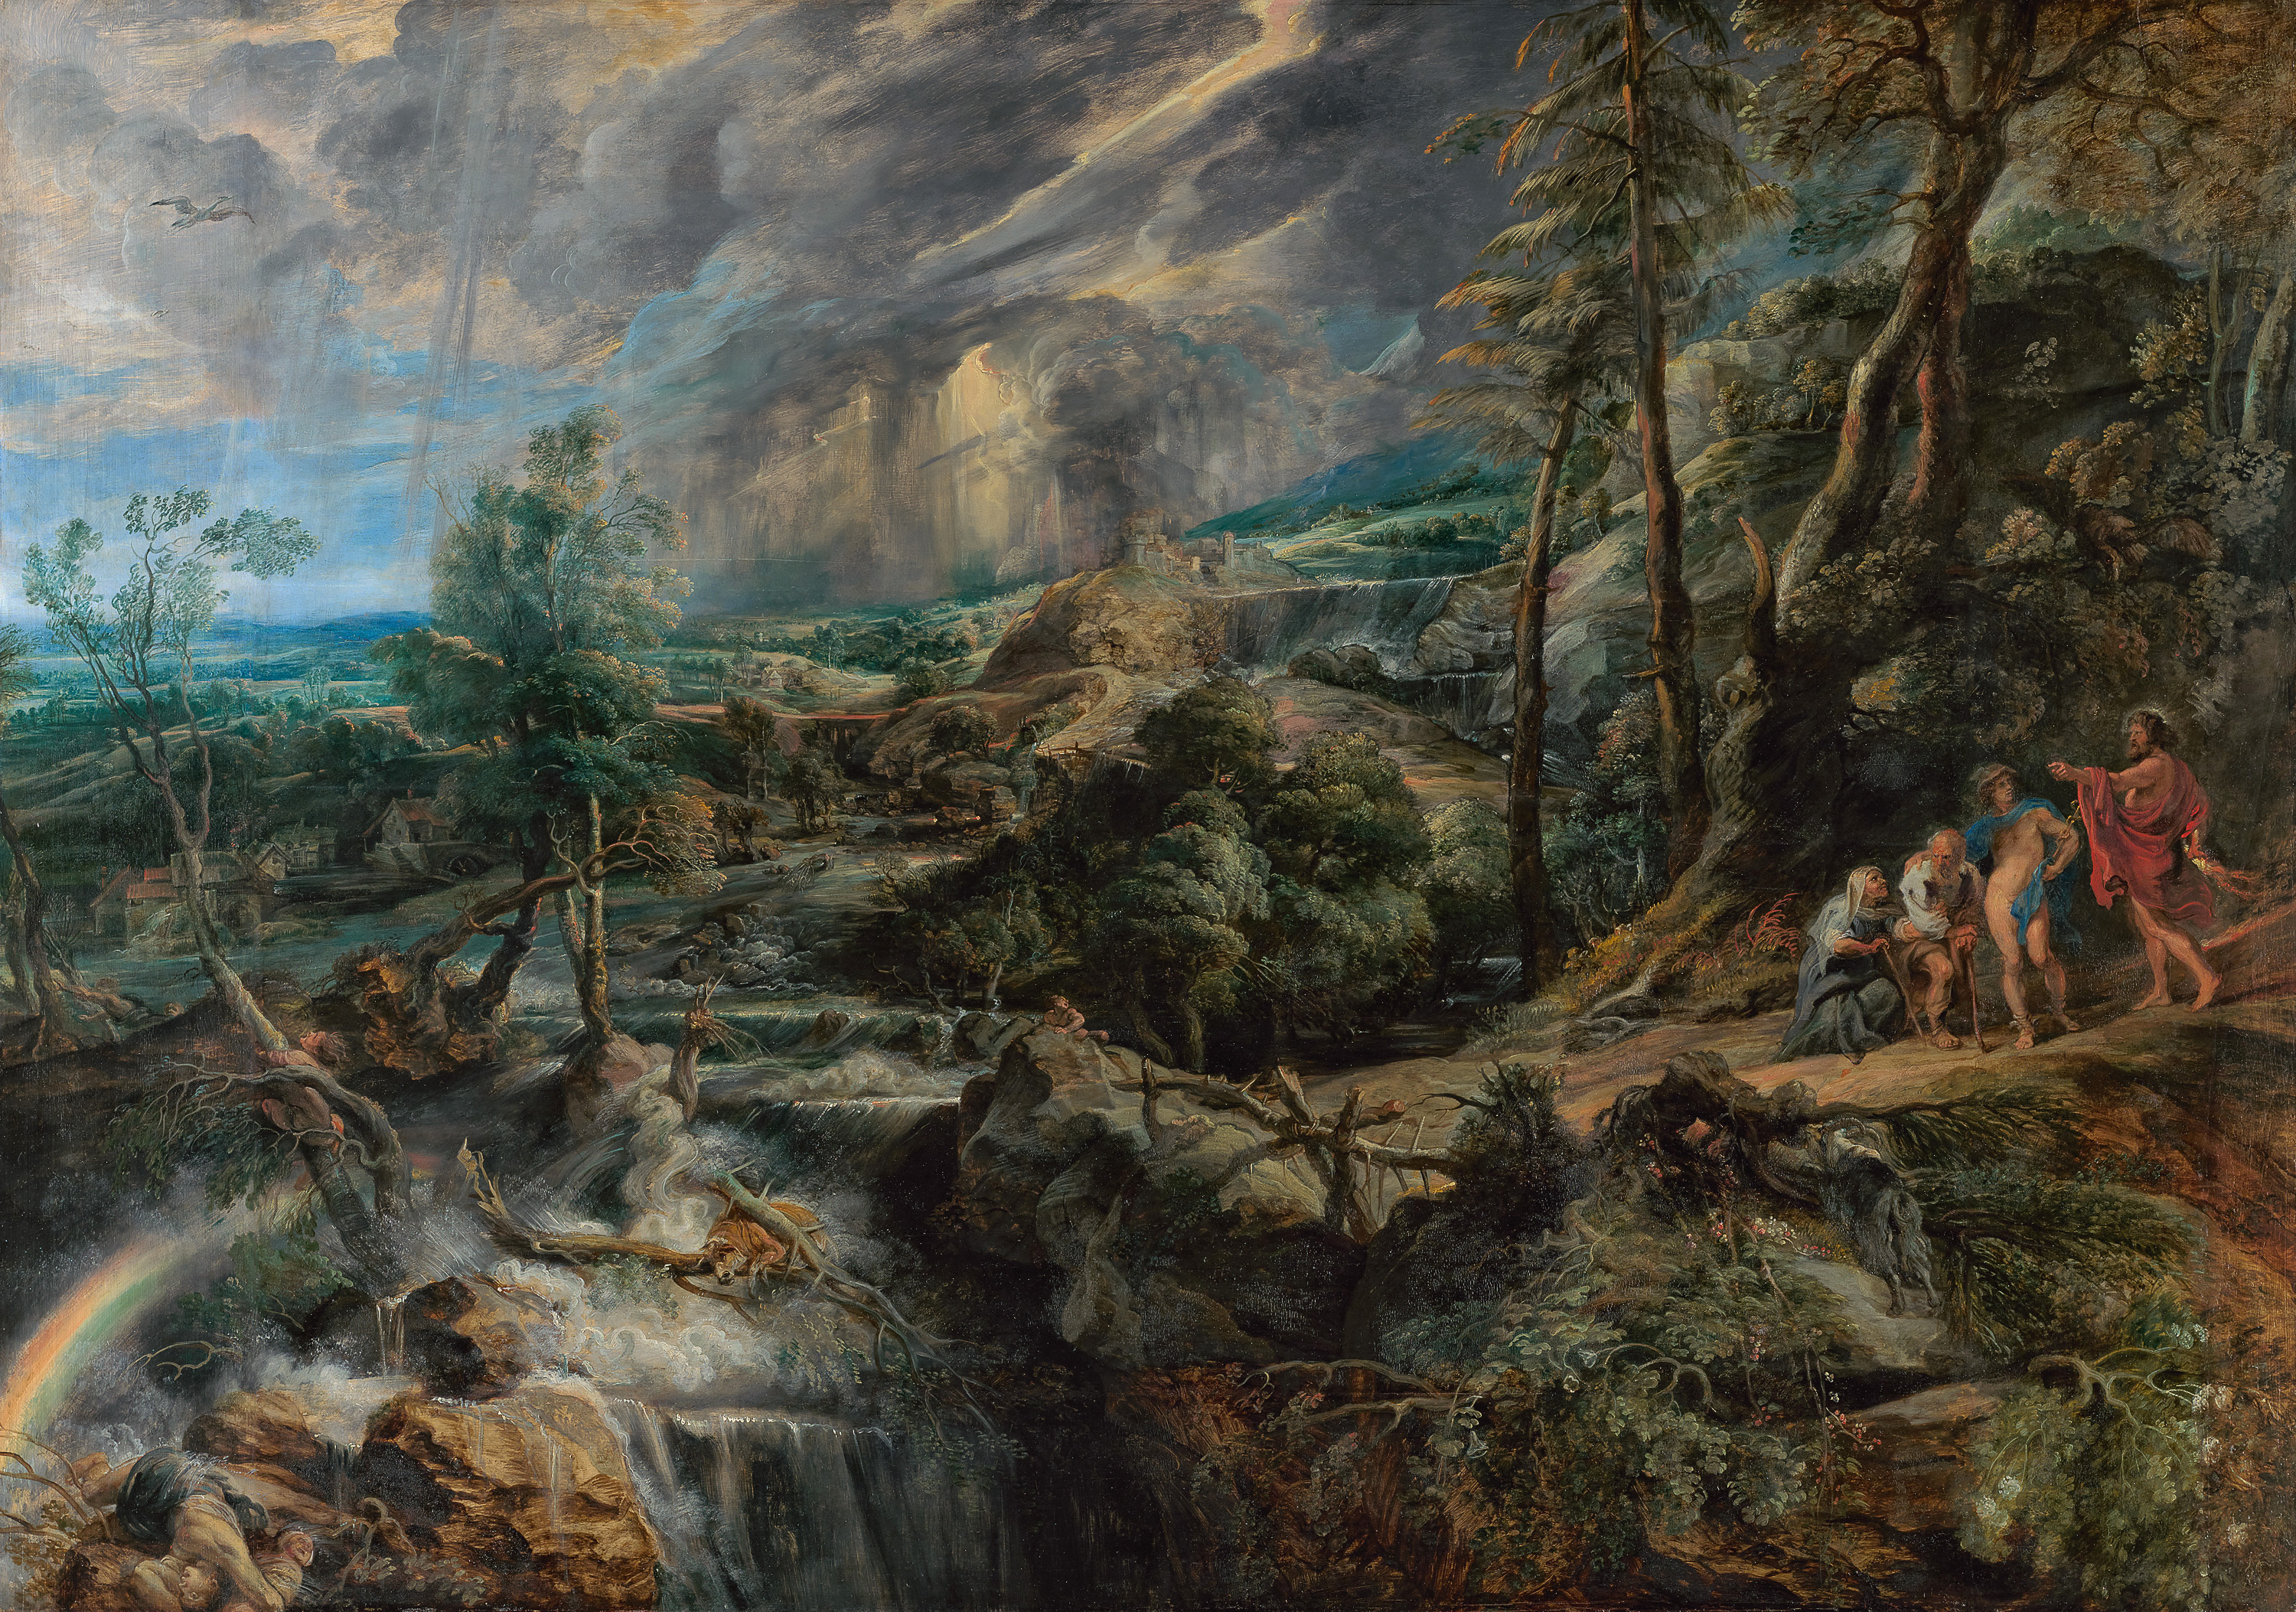 Paisaje con Filemón y Baucis by Peter Paul Rubens - 1620/1625 - 208,5 x 146 cm Kunsthistorisches Museum